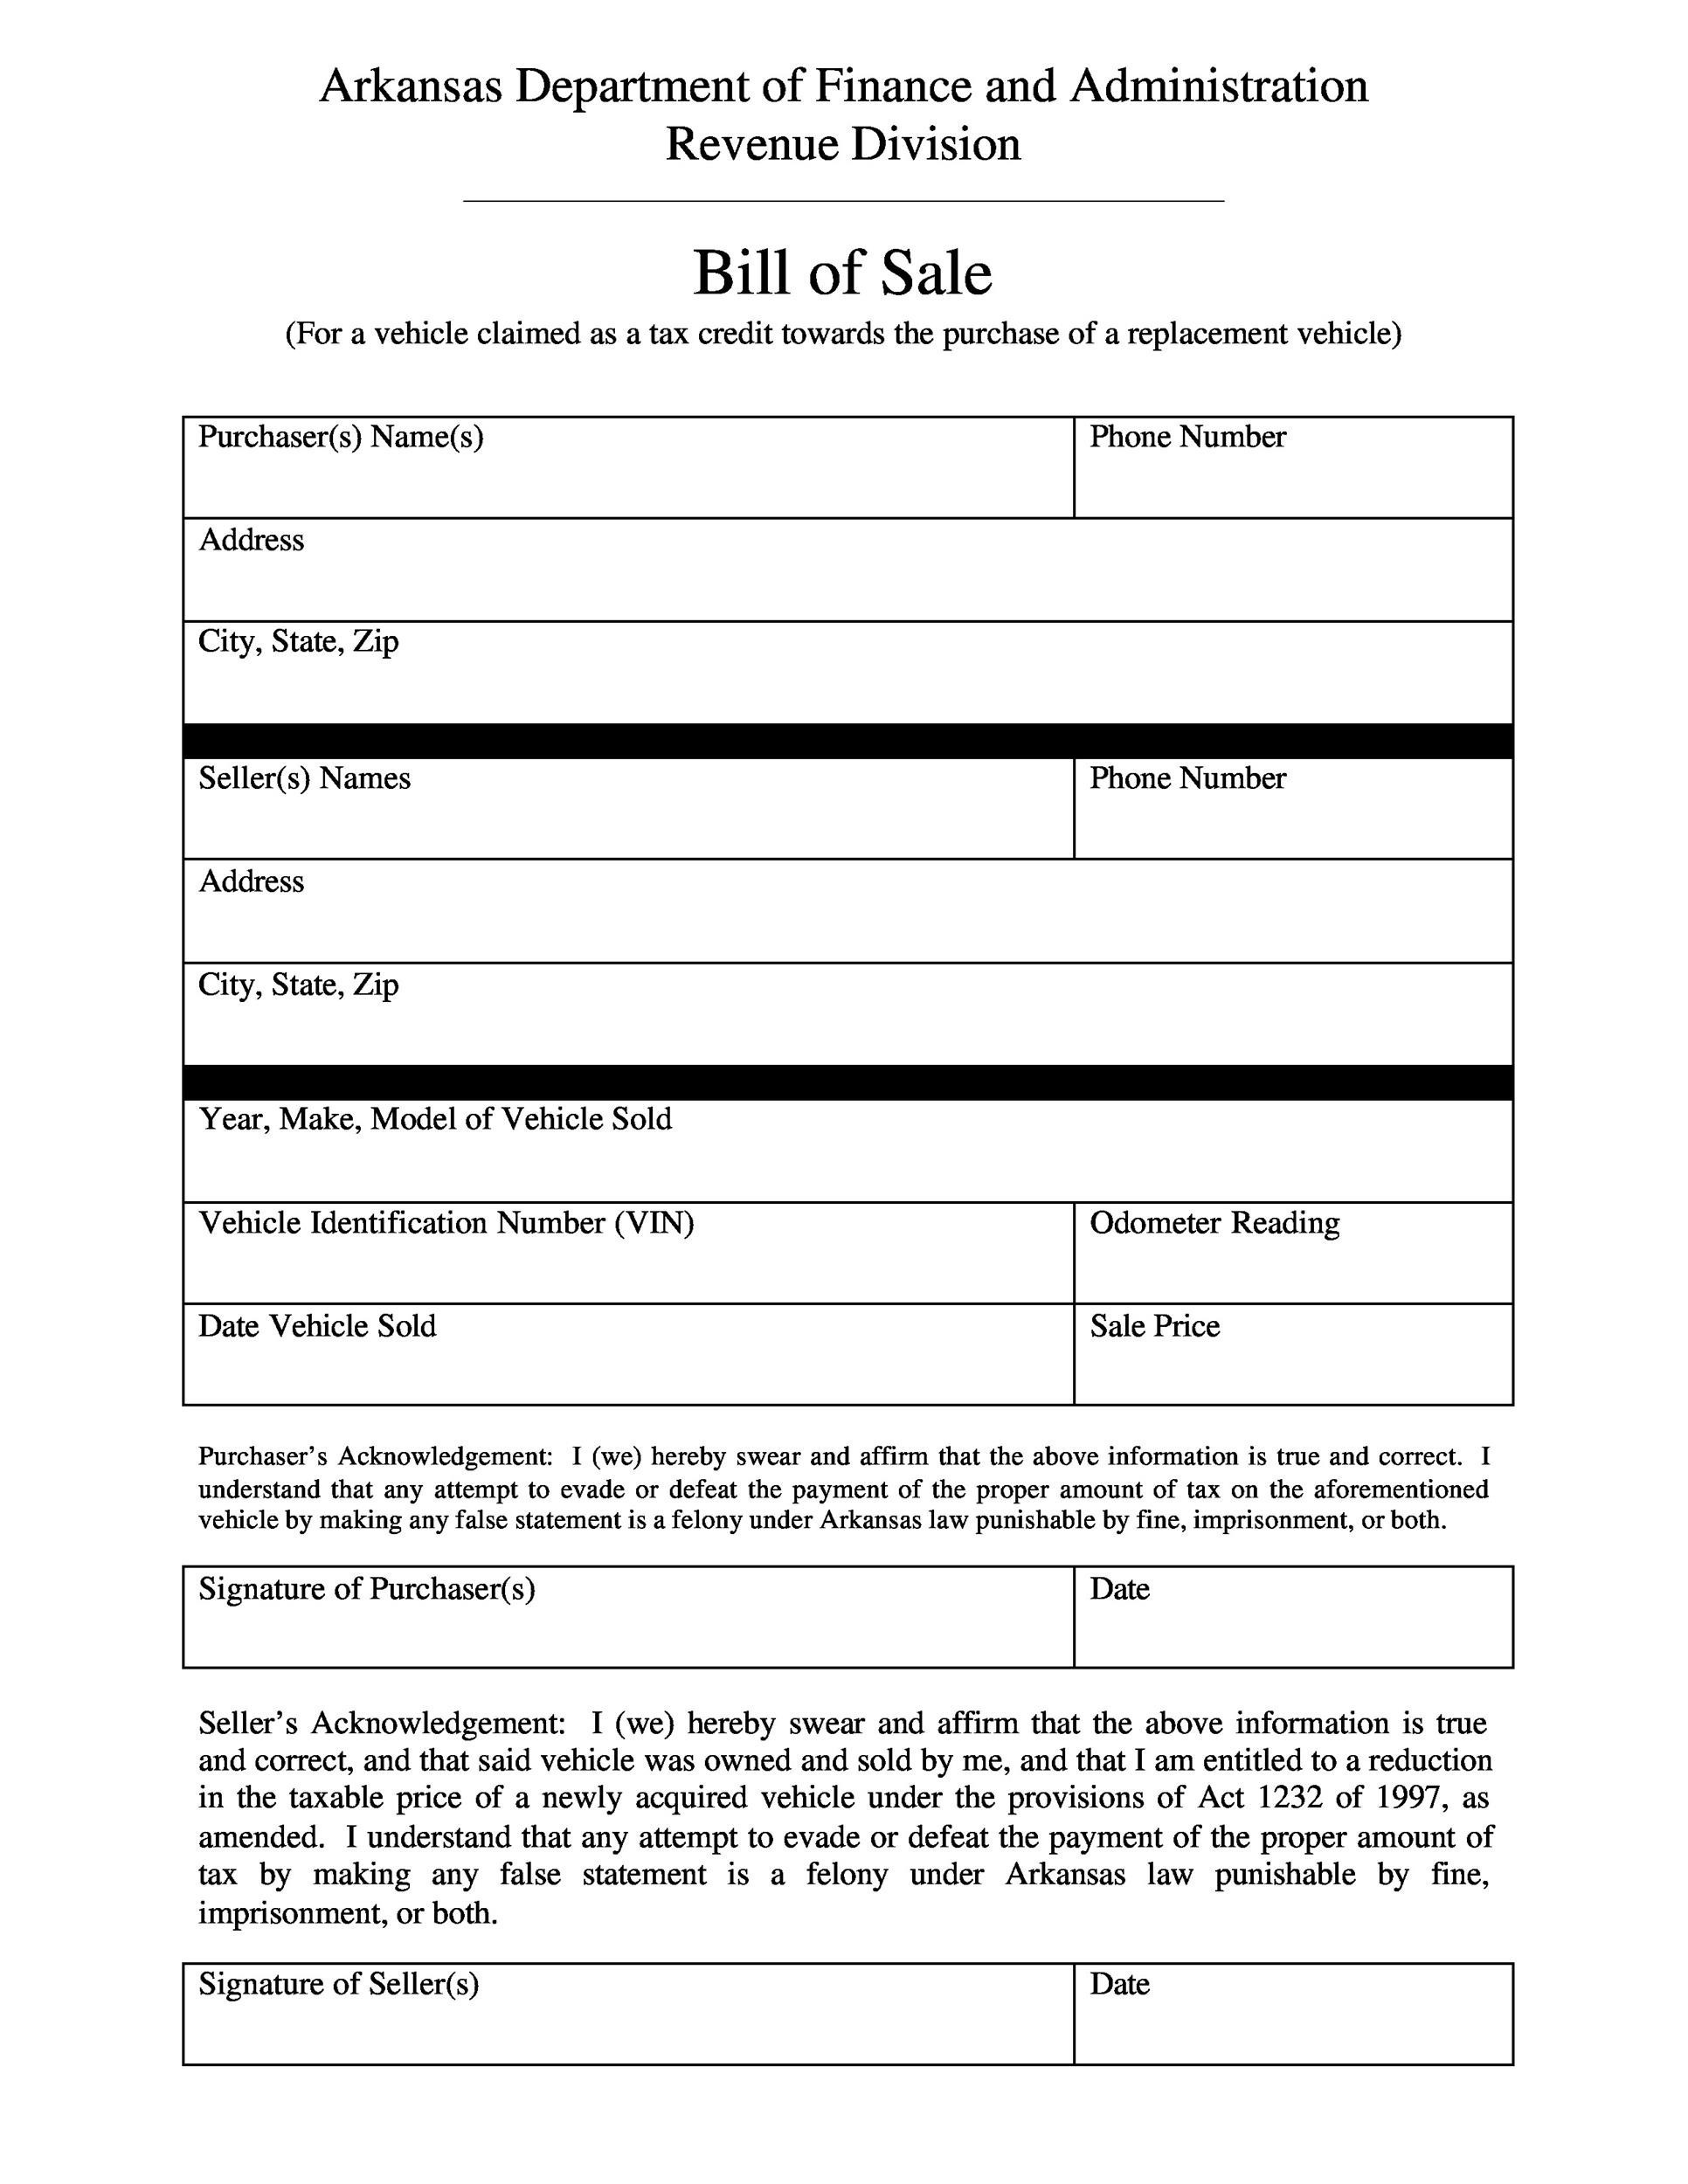 45+ Fee Printable Bill of Sale Templates (Car, Boat, Gun, Vehicle...) ᐅ